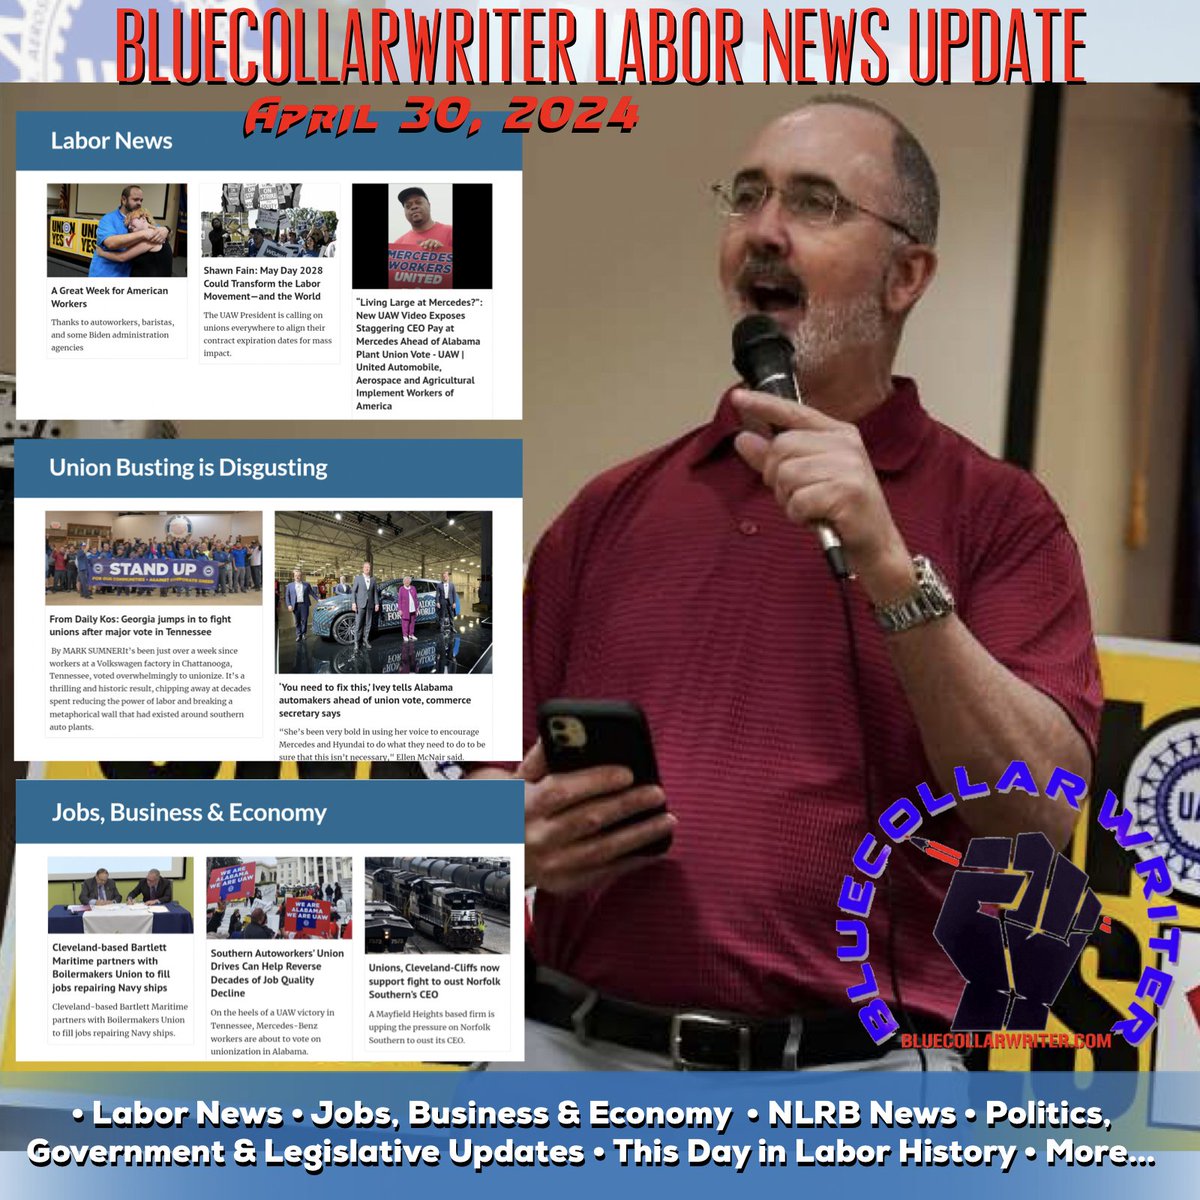 #BlueCollarWriter Labor News Update - 4/30/2024: 

bluecollarwriter.com/home/labor-new…

#1u #UnionStrong #UnionYes #ItsBetterInAUnion #LaborHistory #NLRB #Jobs #Economy 
#UnionBustingIsDisgusting